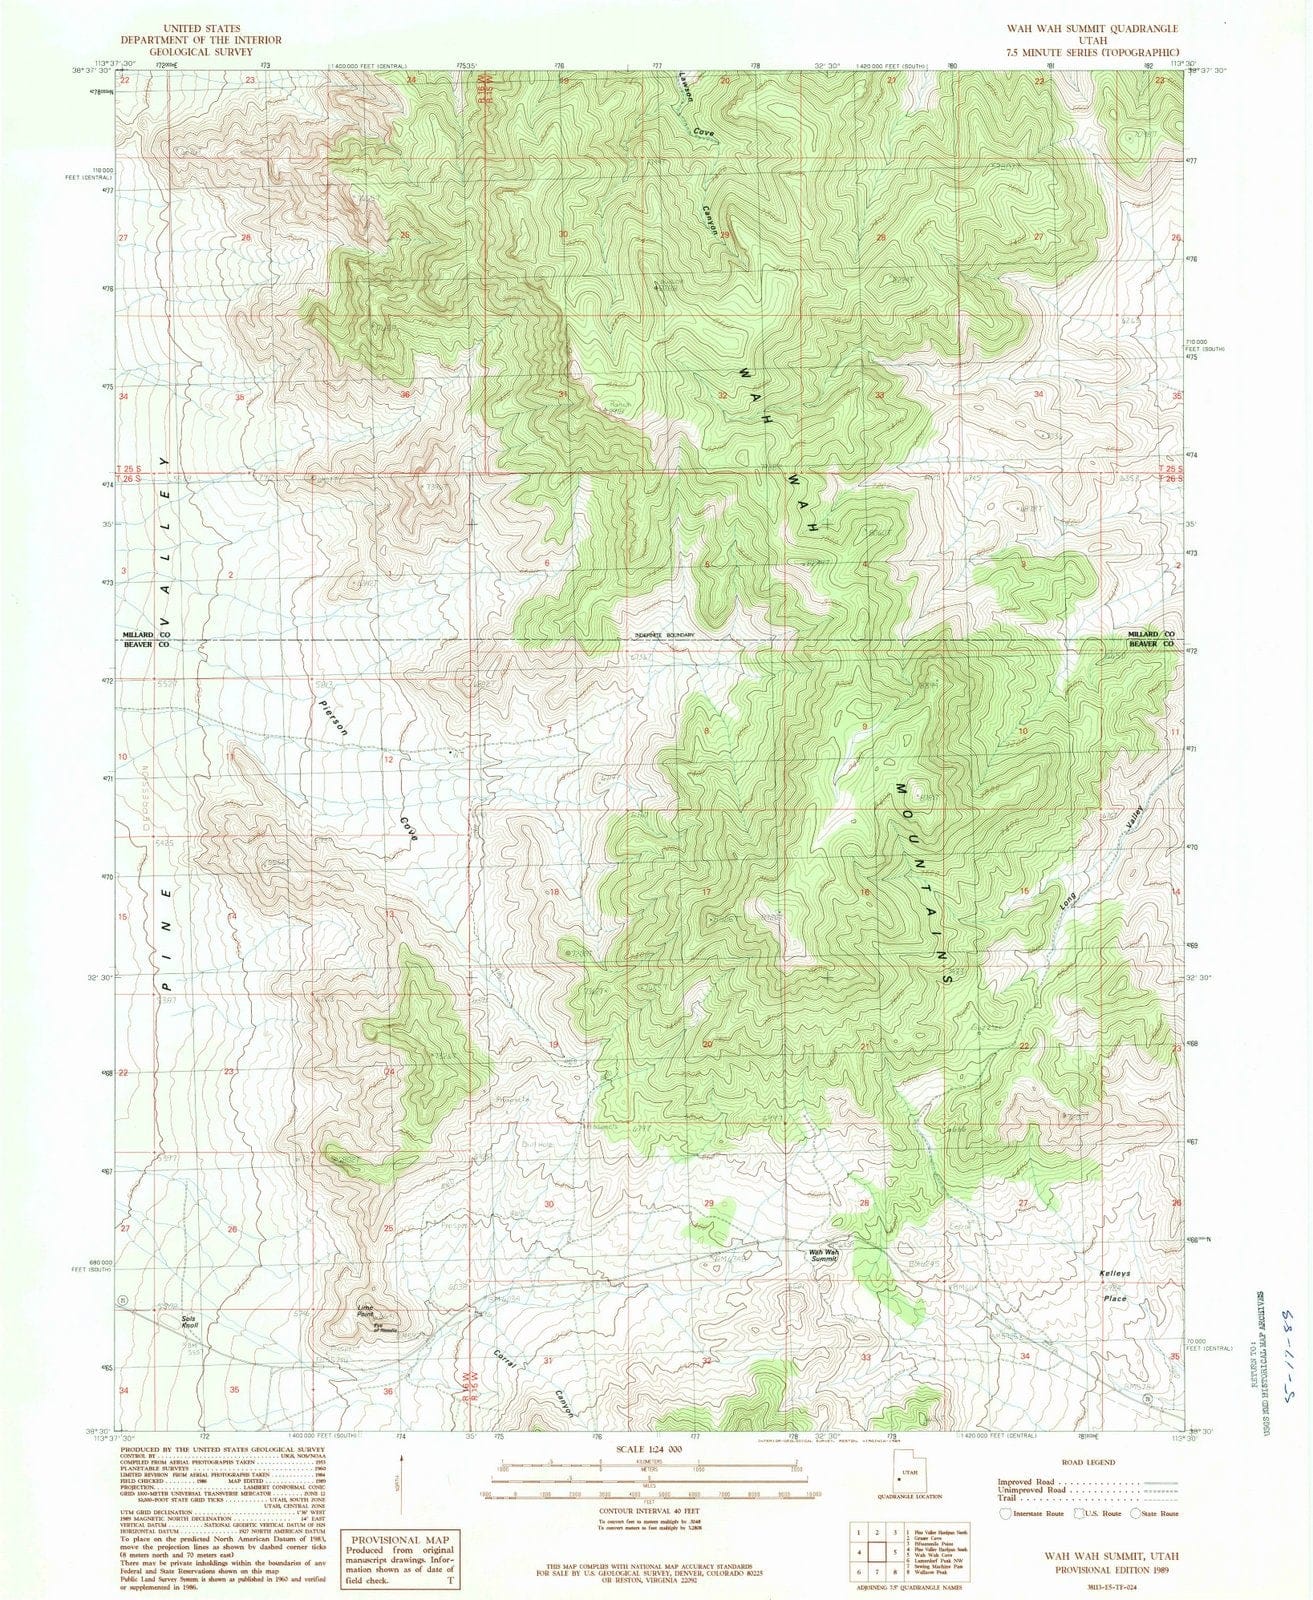 1989 Wah Wah Summit, UT - Utah - USGS Topographic Map